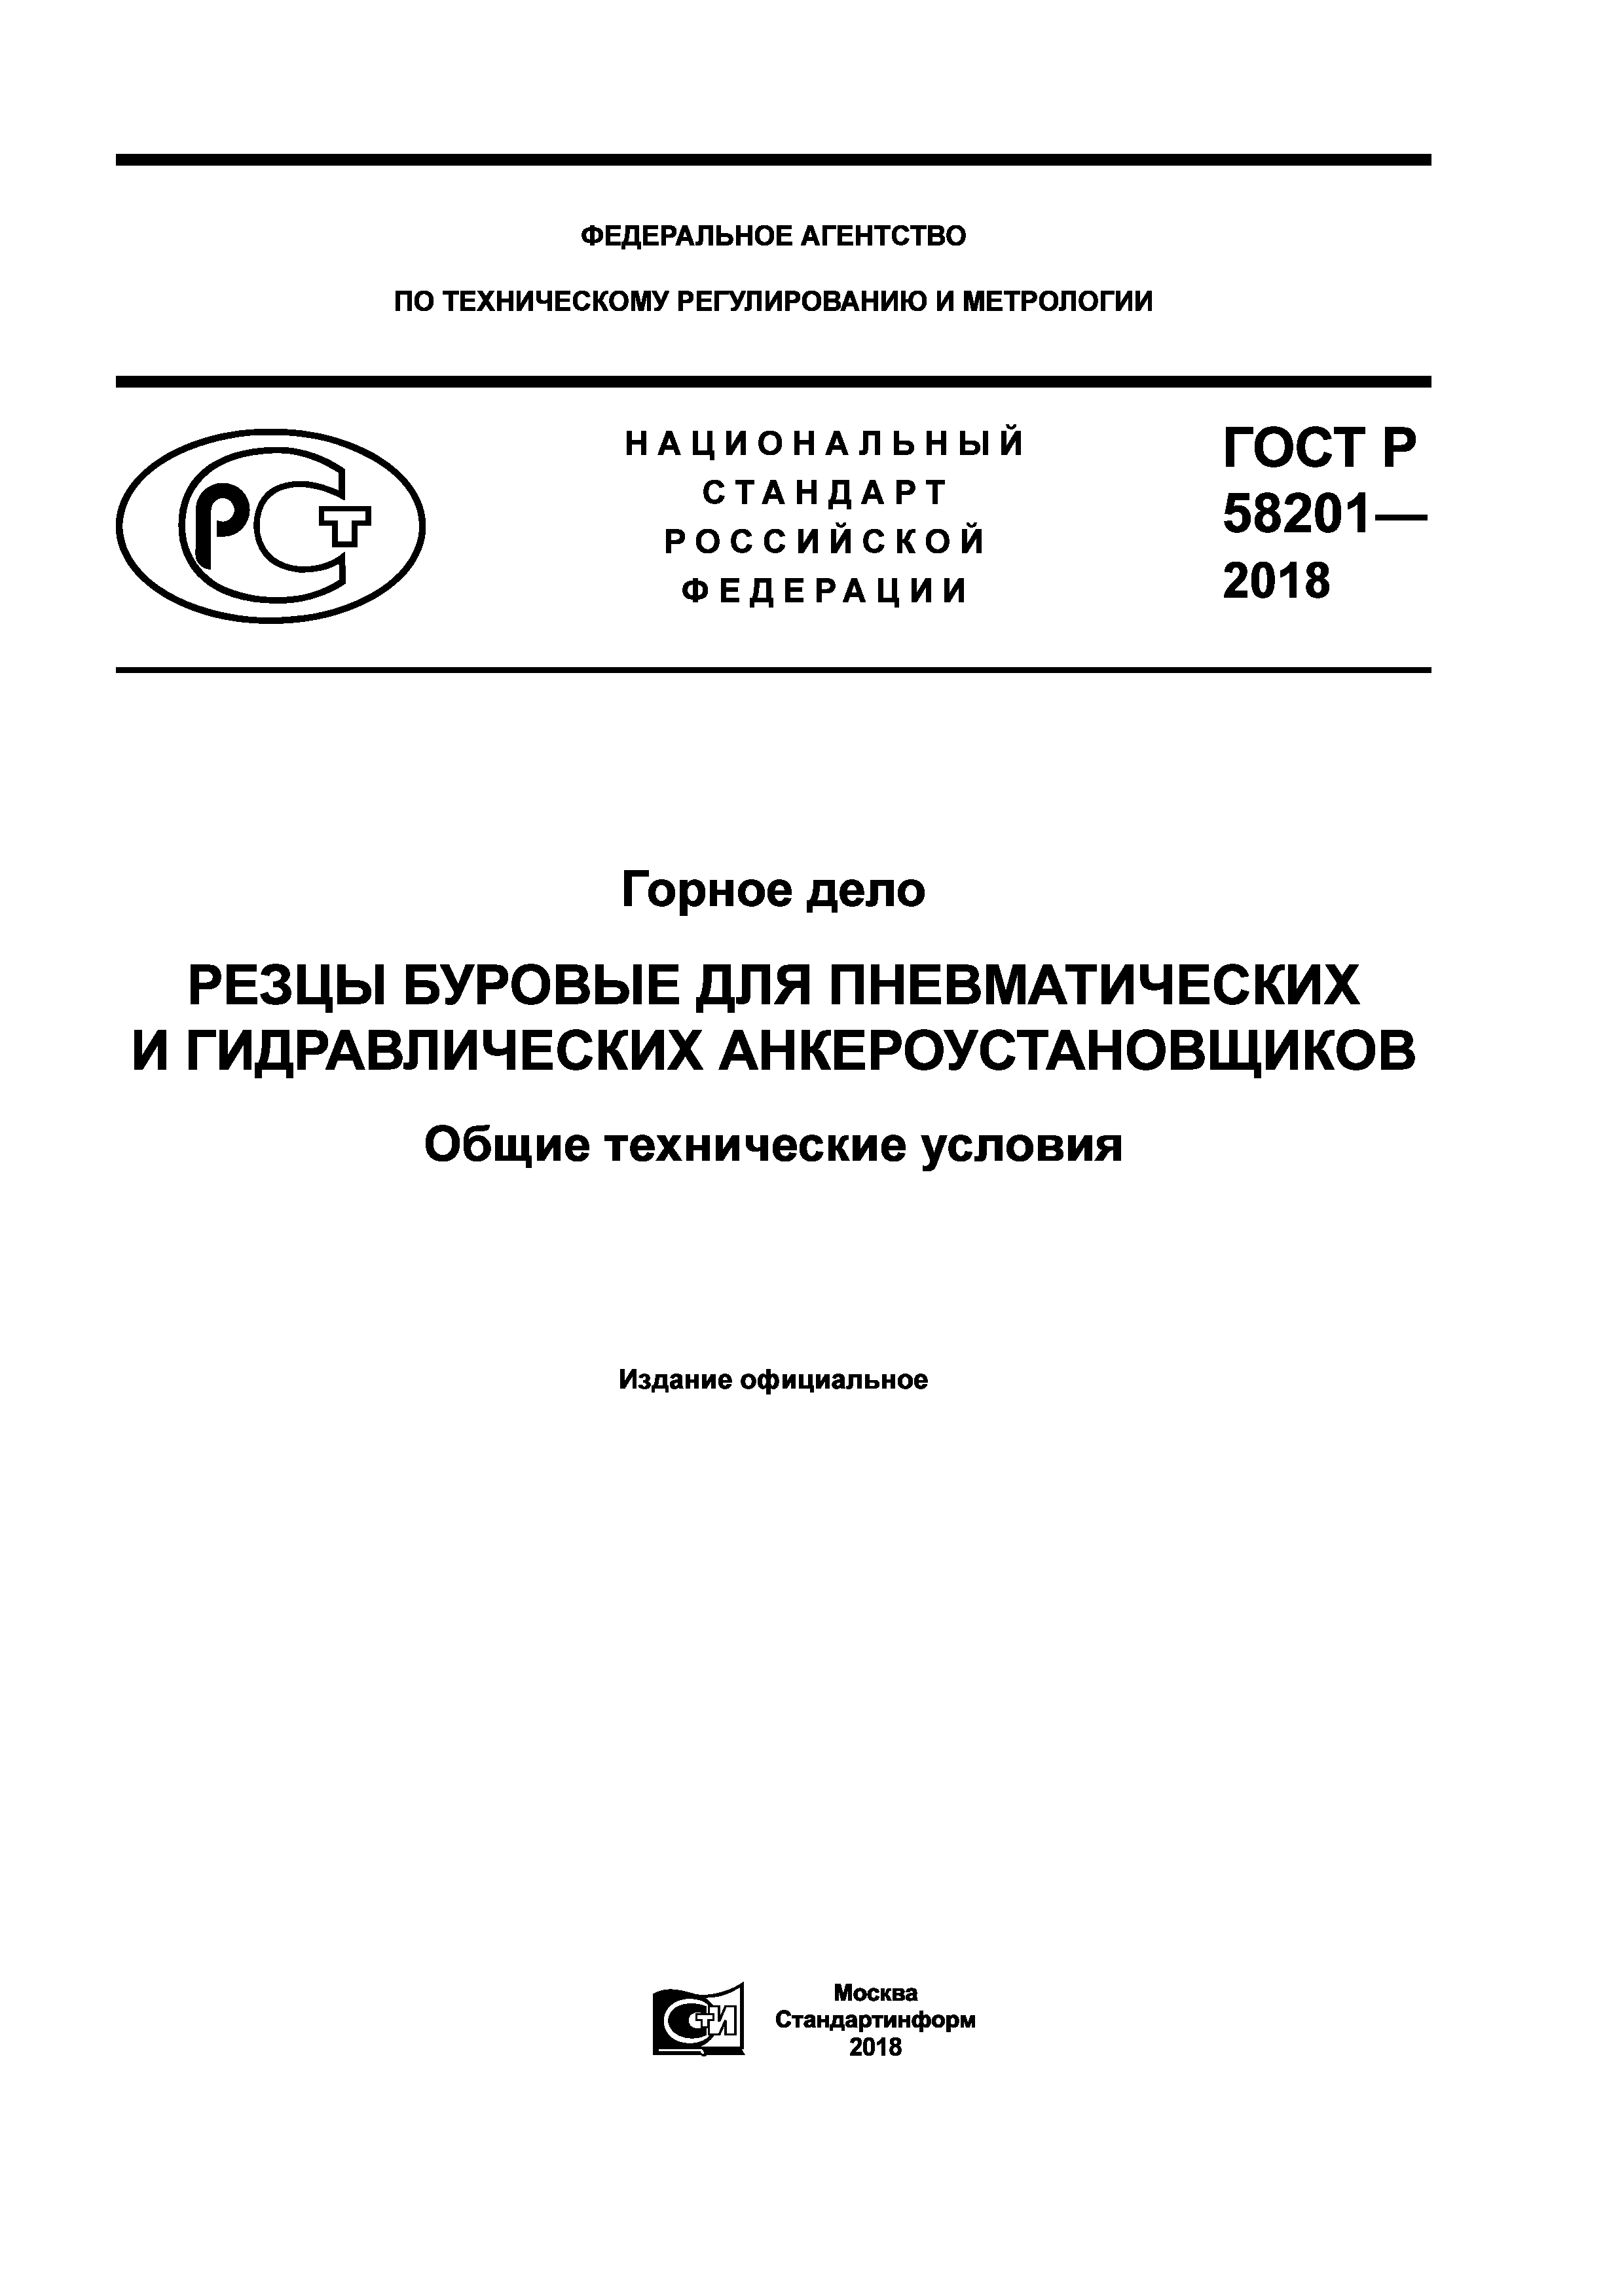 ГОСТ Р 58201-2018